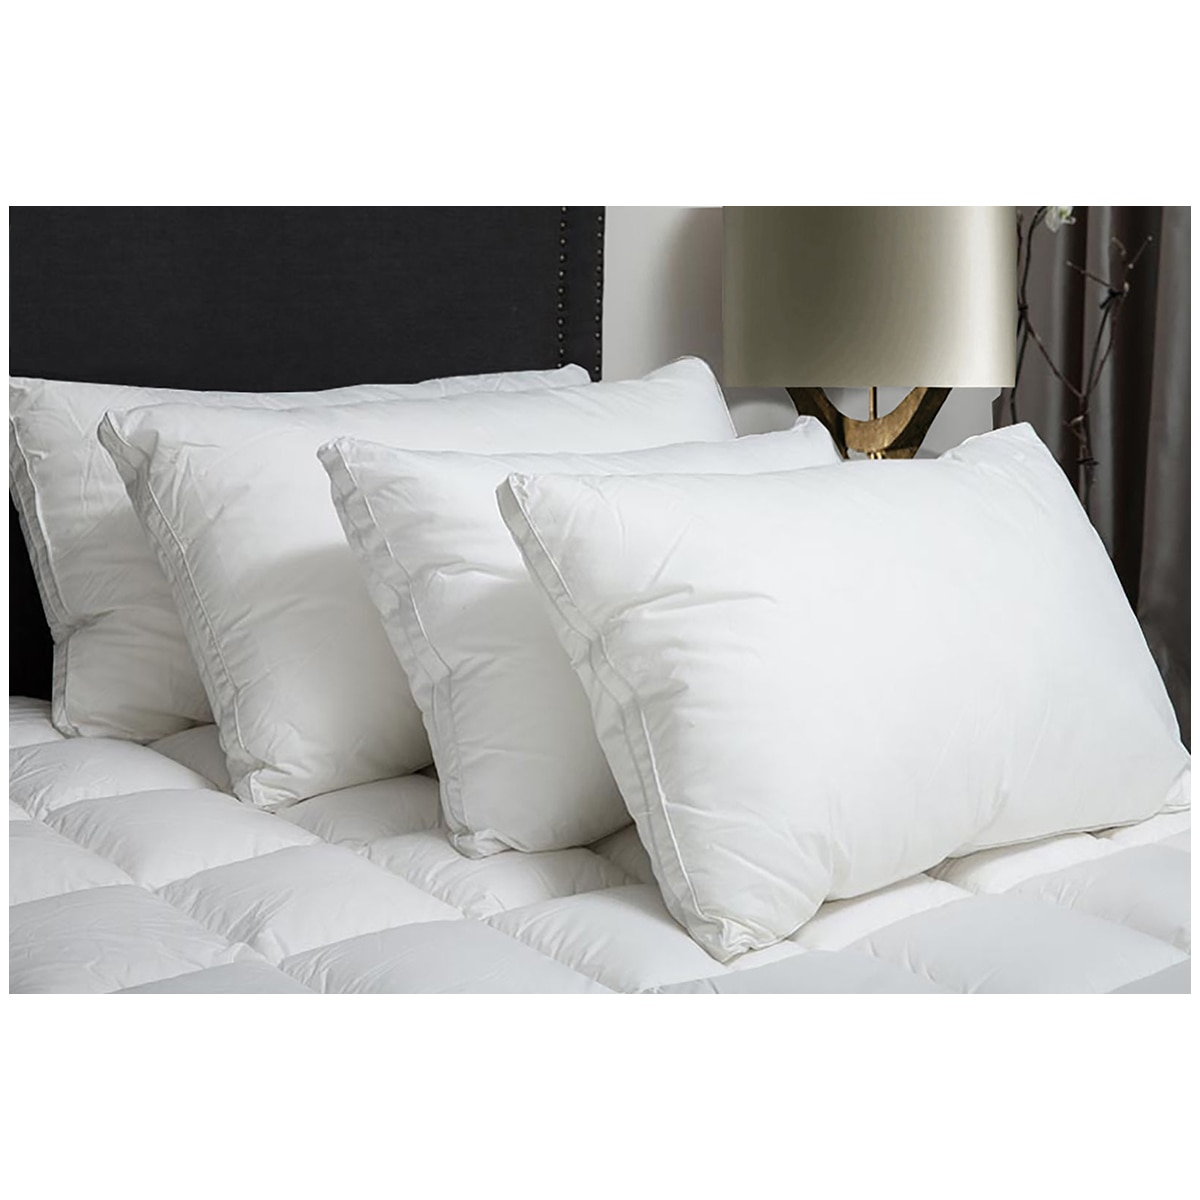 Bdirect Royal Comfort King Size Hotel Pillow